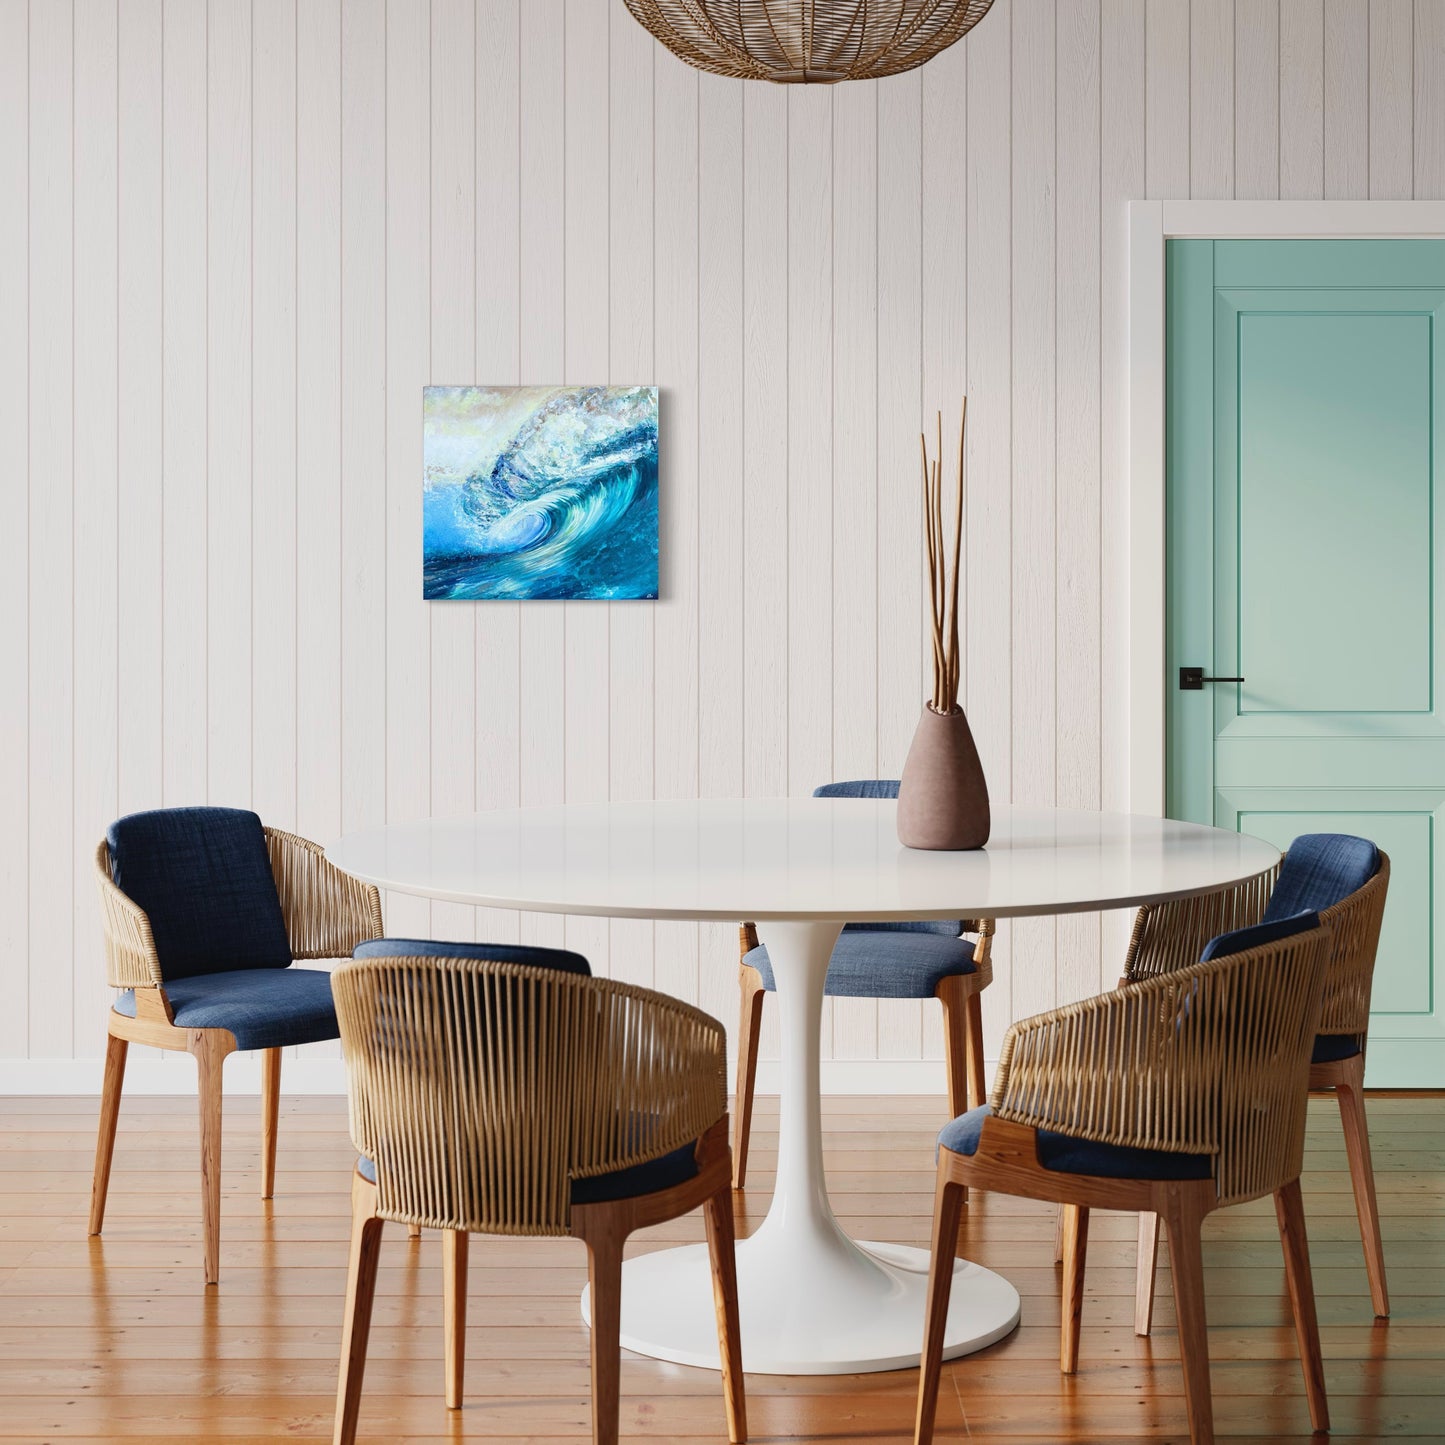 Original Barrel Wave art in a dining room setting